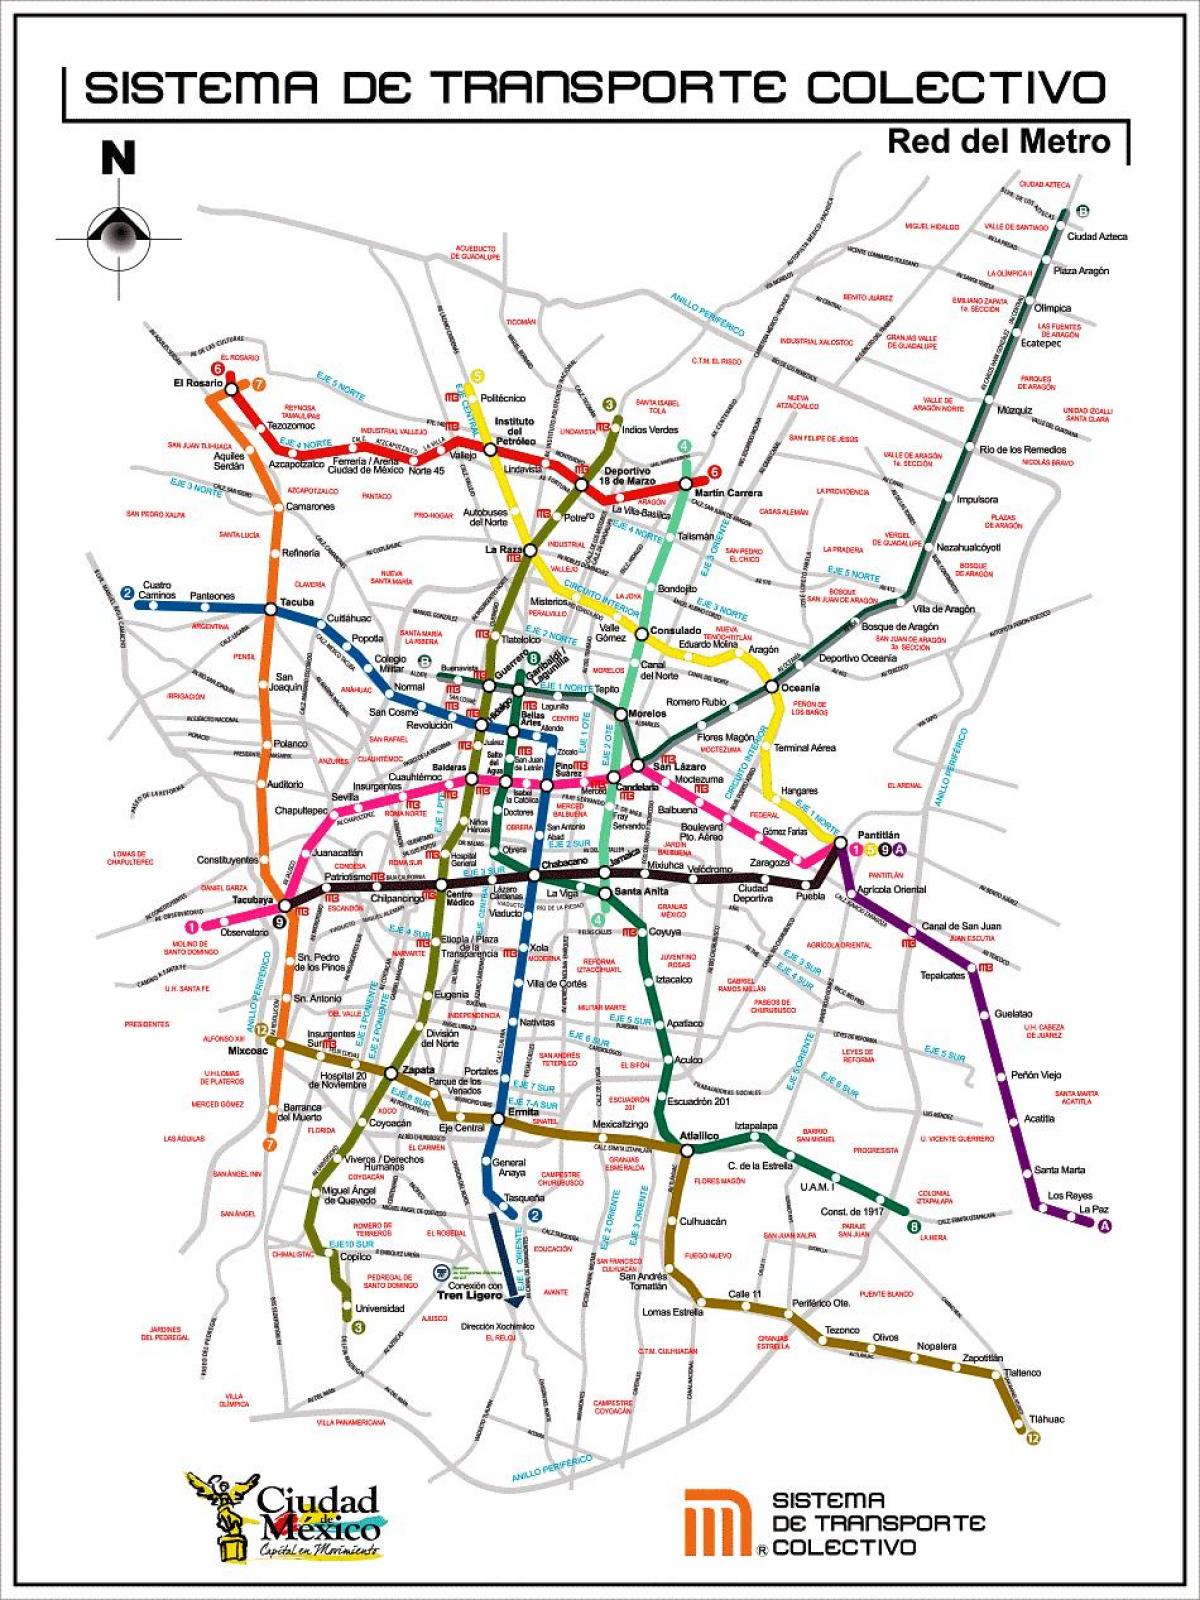 kort over Mexico City transit